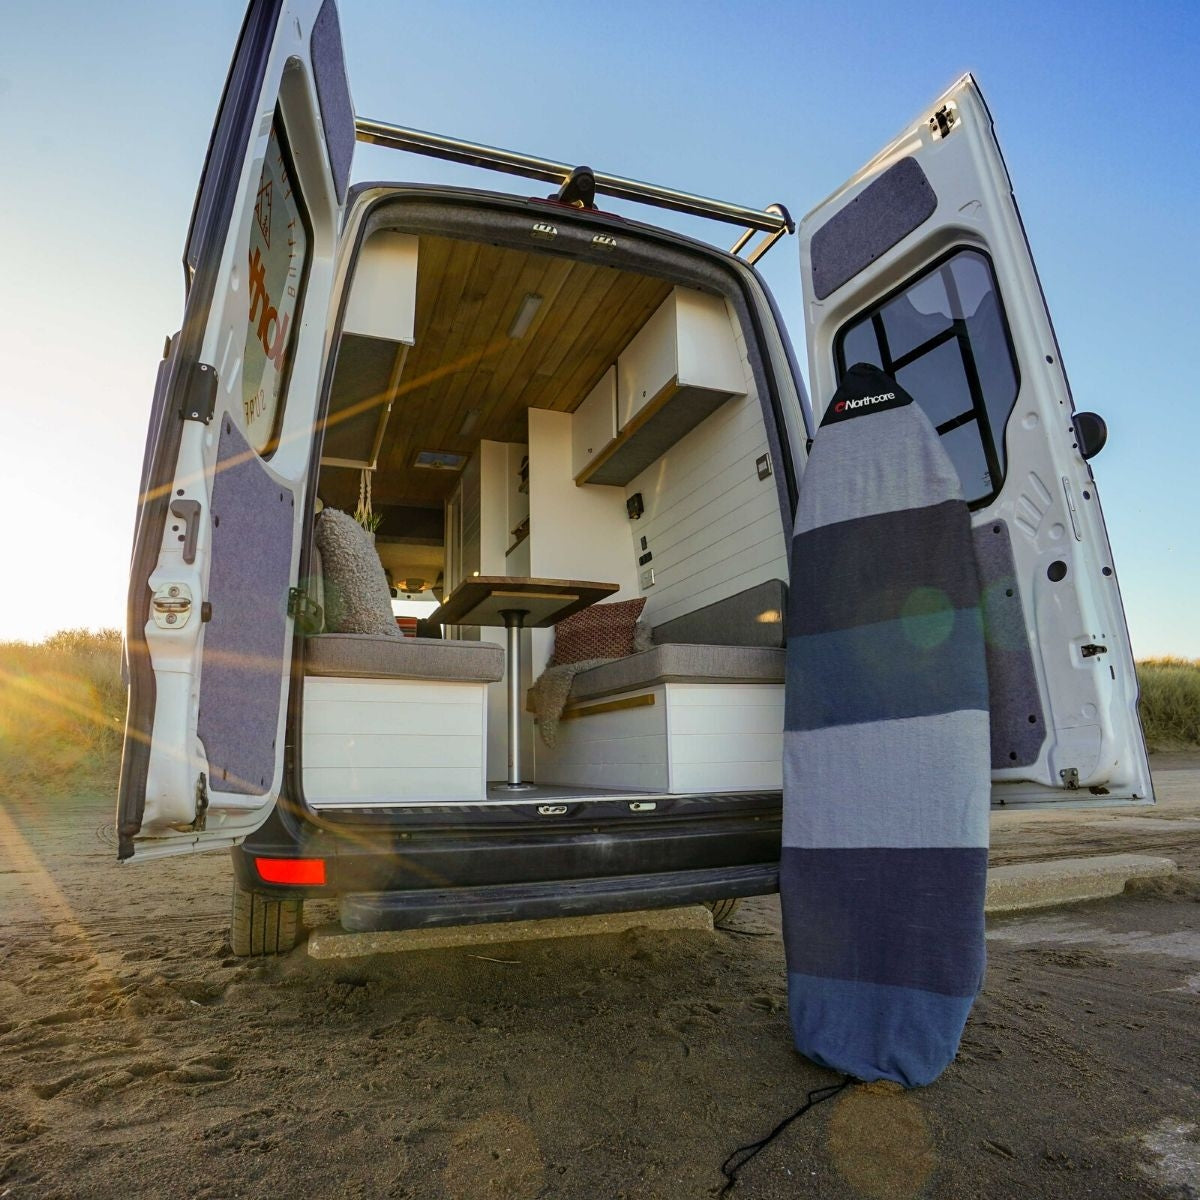 Northcore Retro Stripe Shortboard Sock- 6'4"
Van Life
Camper Van